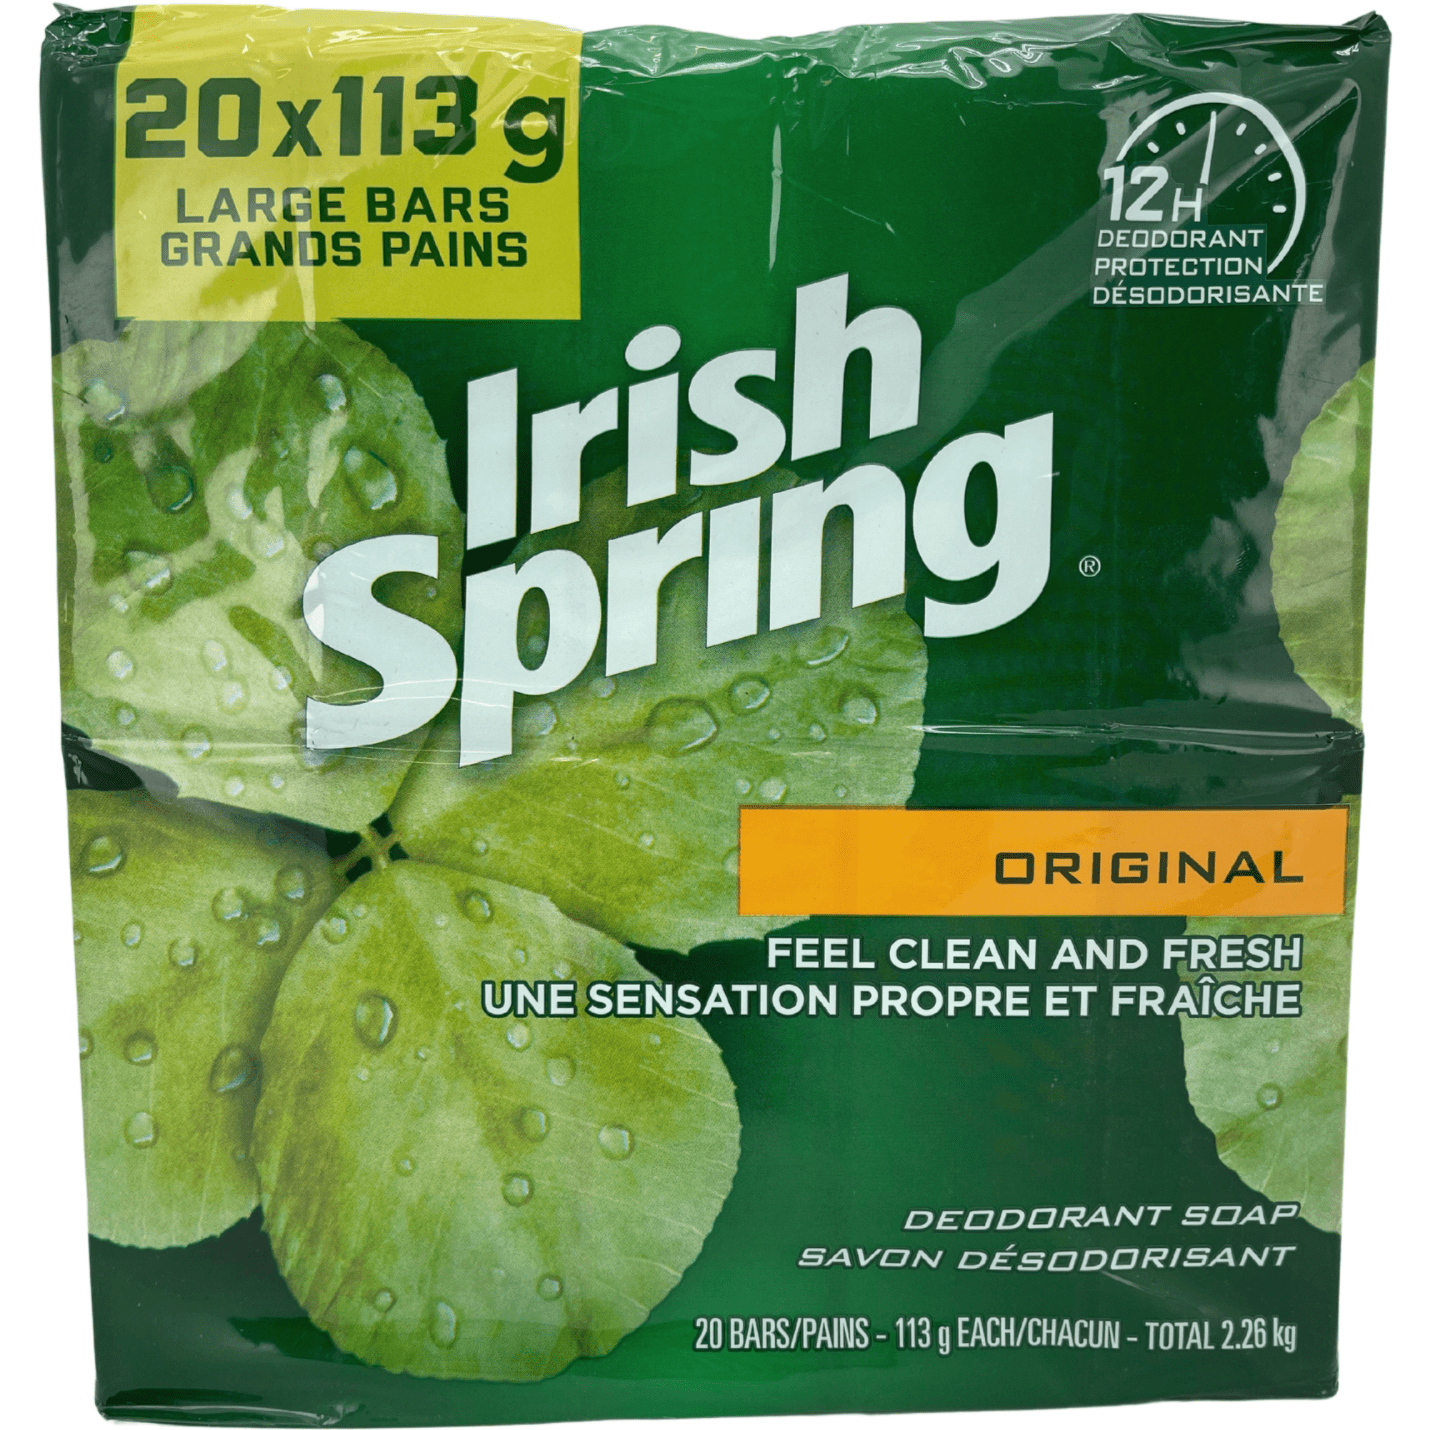 Irish Spring Original Bar Soap / Large Bars / 20 x 113g / Men's Deodorant Soap